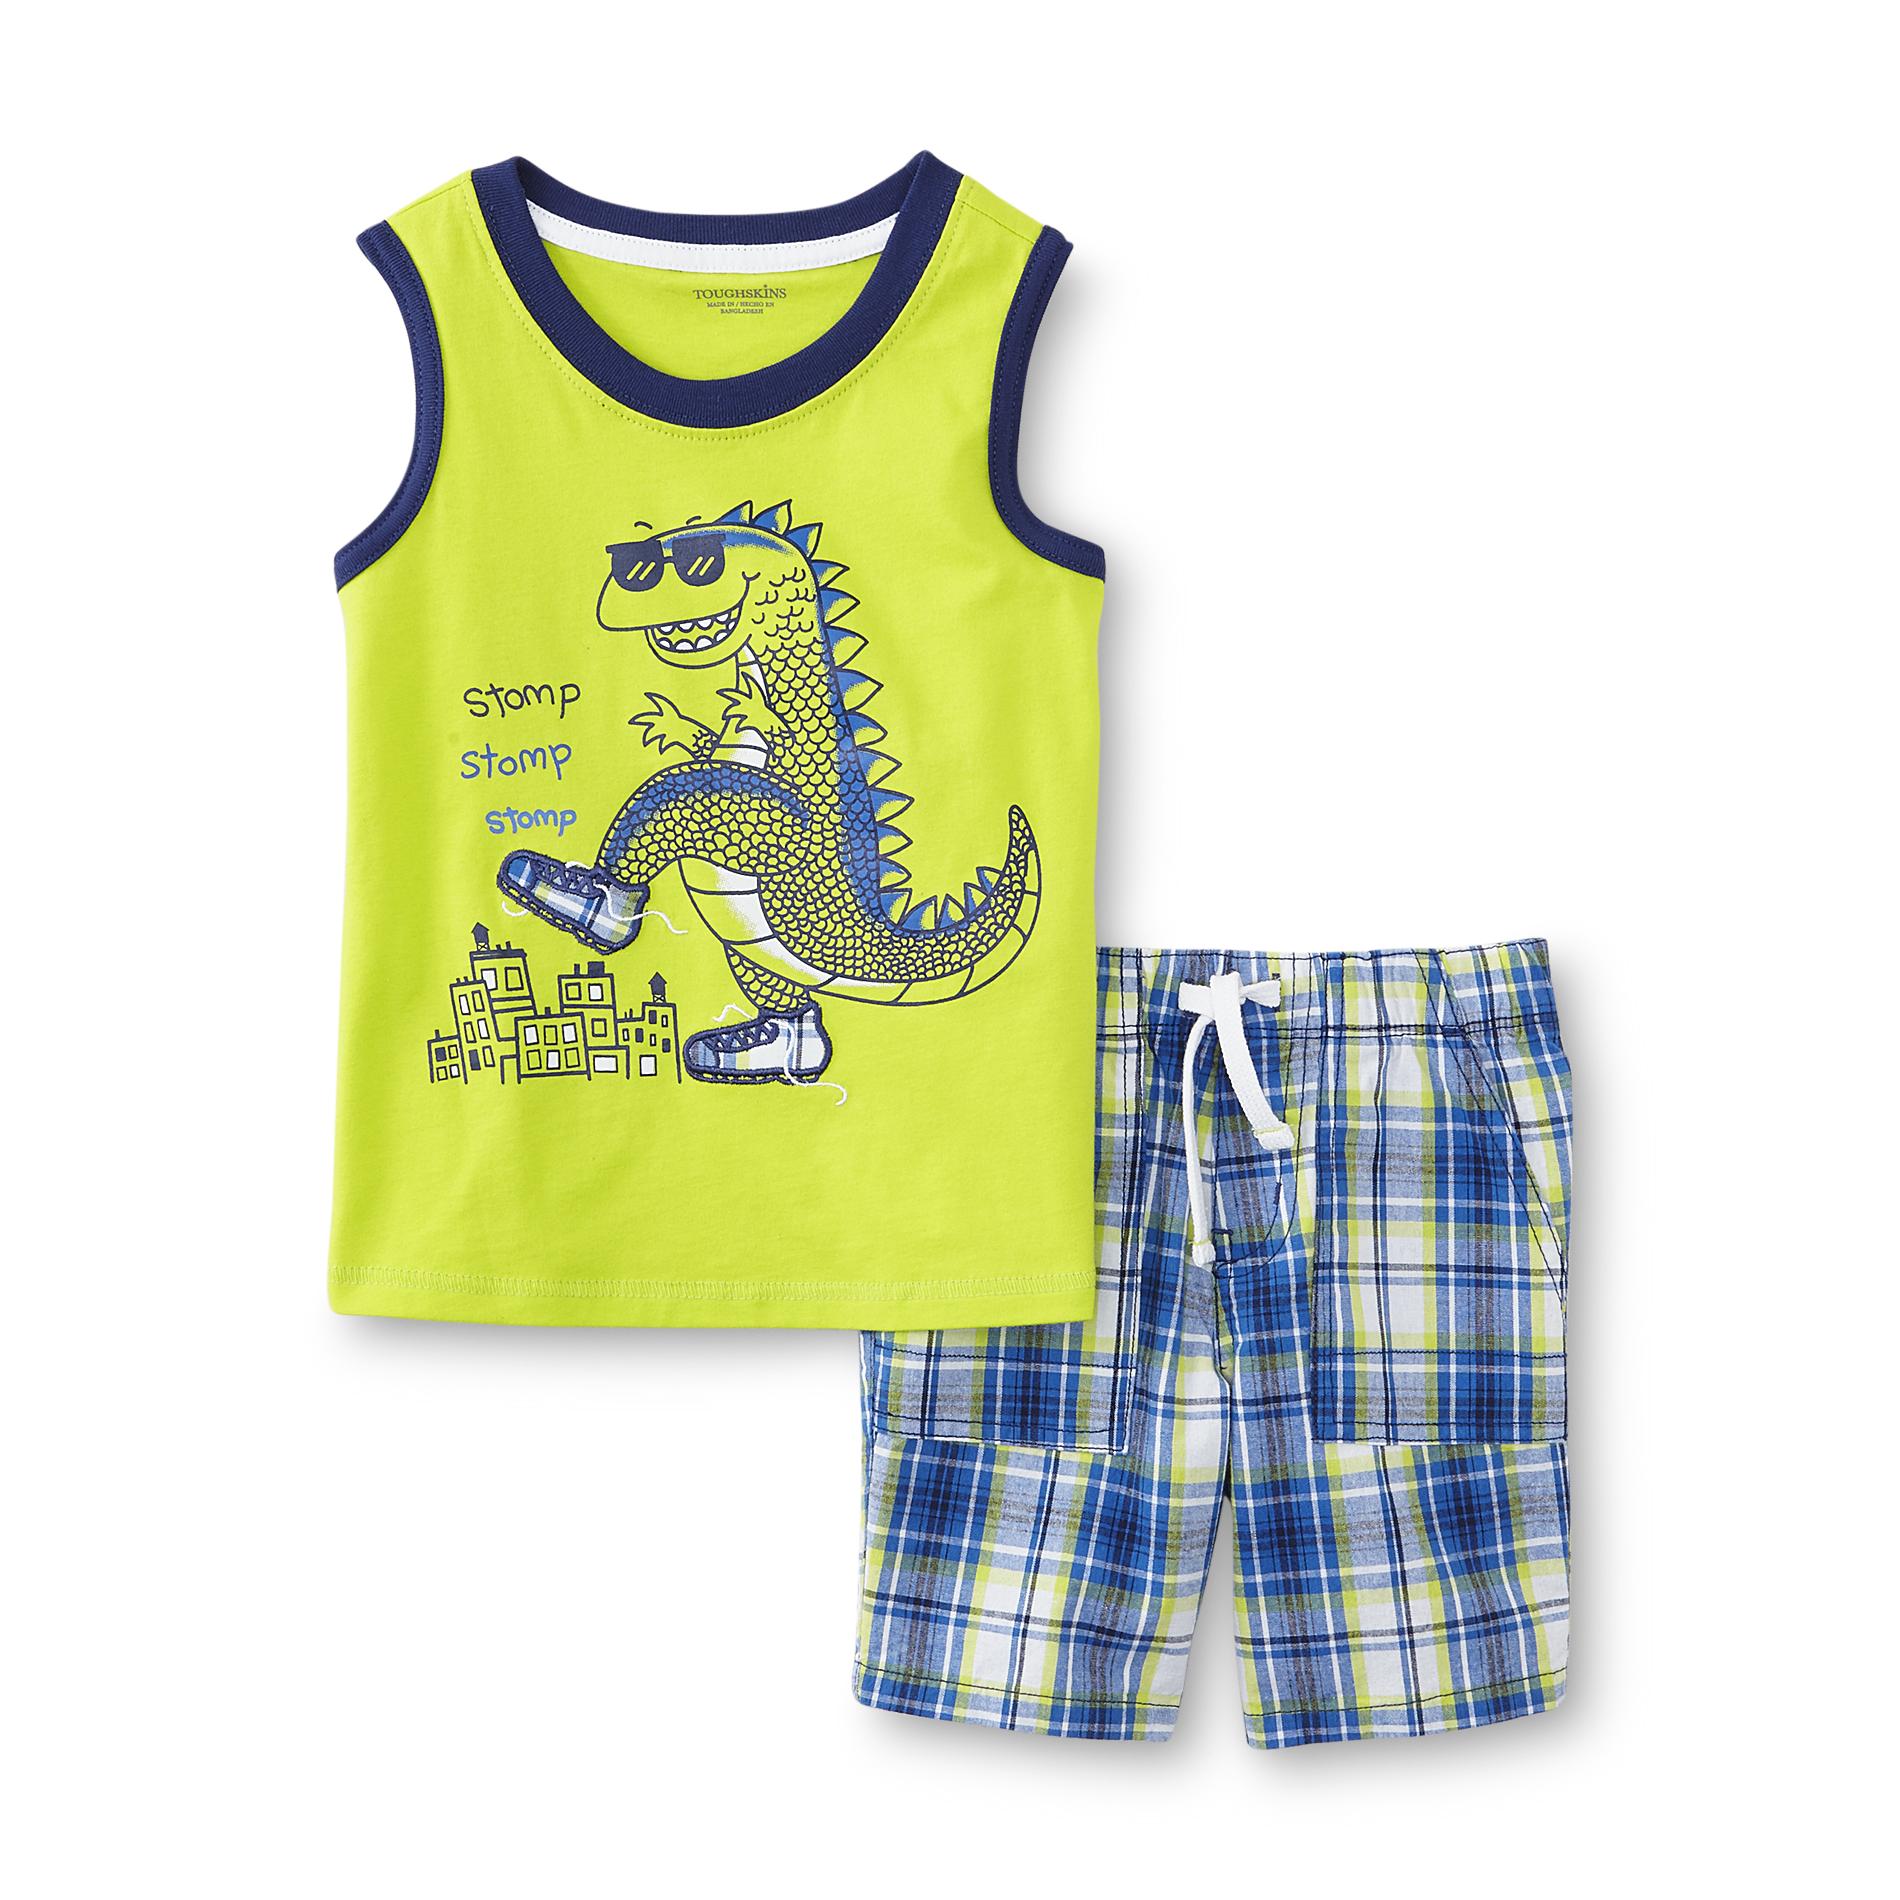 Toughskins Infant & Toddler Boy's Sleeveless T-Shirt & Shorts - Dinosaur